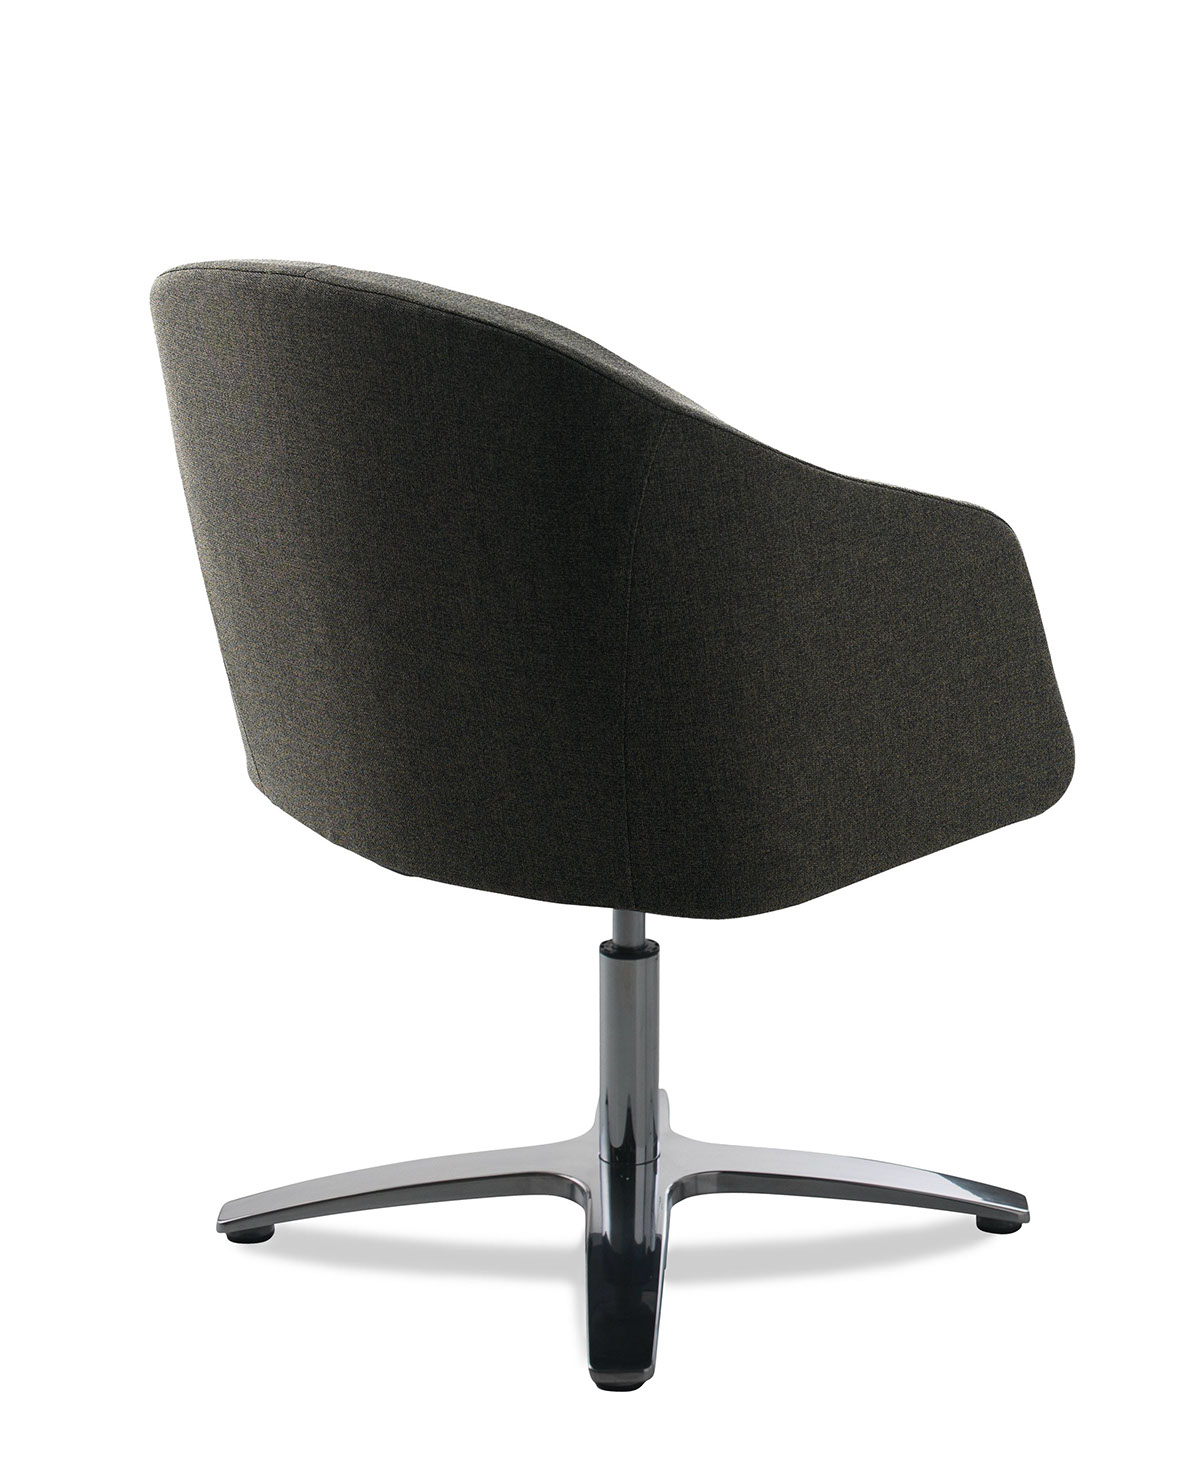 chair armchair Office office chair mace leather